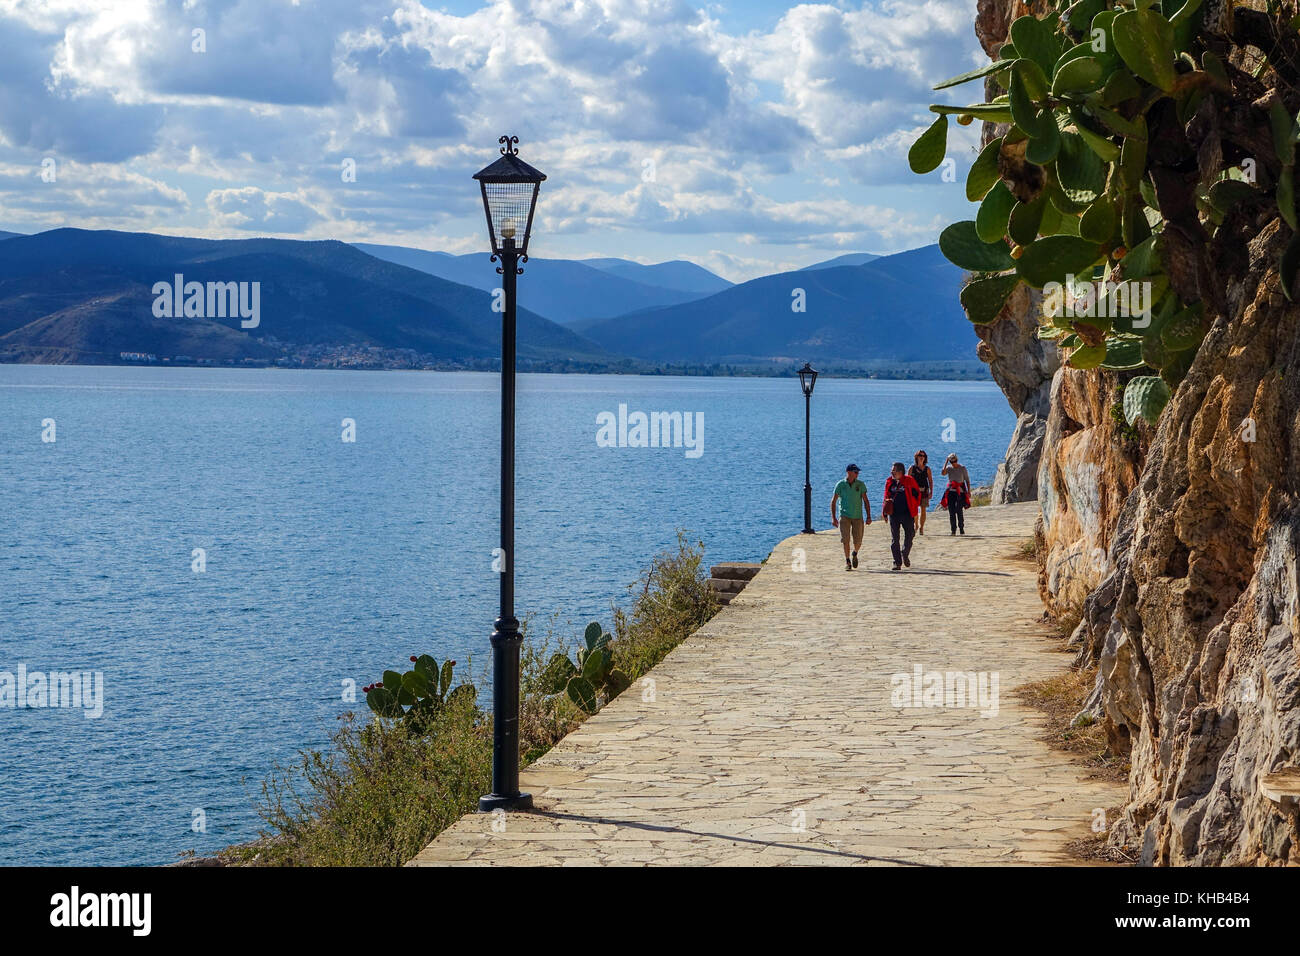 Seaside promenade, walkway, Nafpio, Peleponnese, Greece Stock Photo